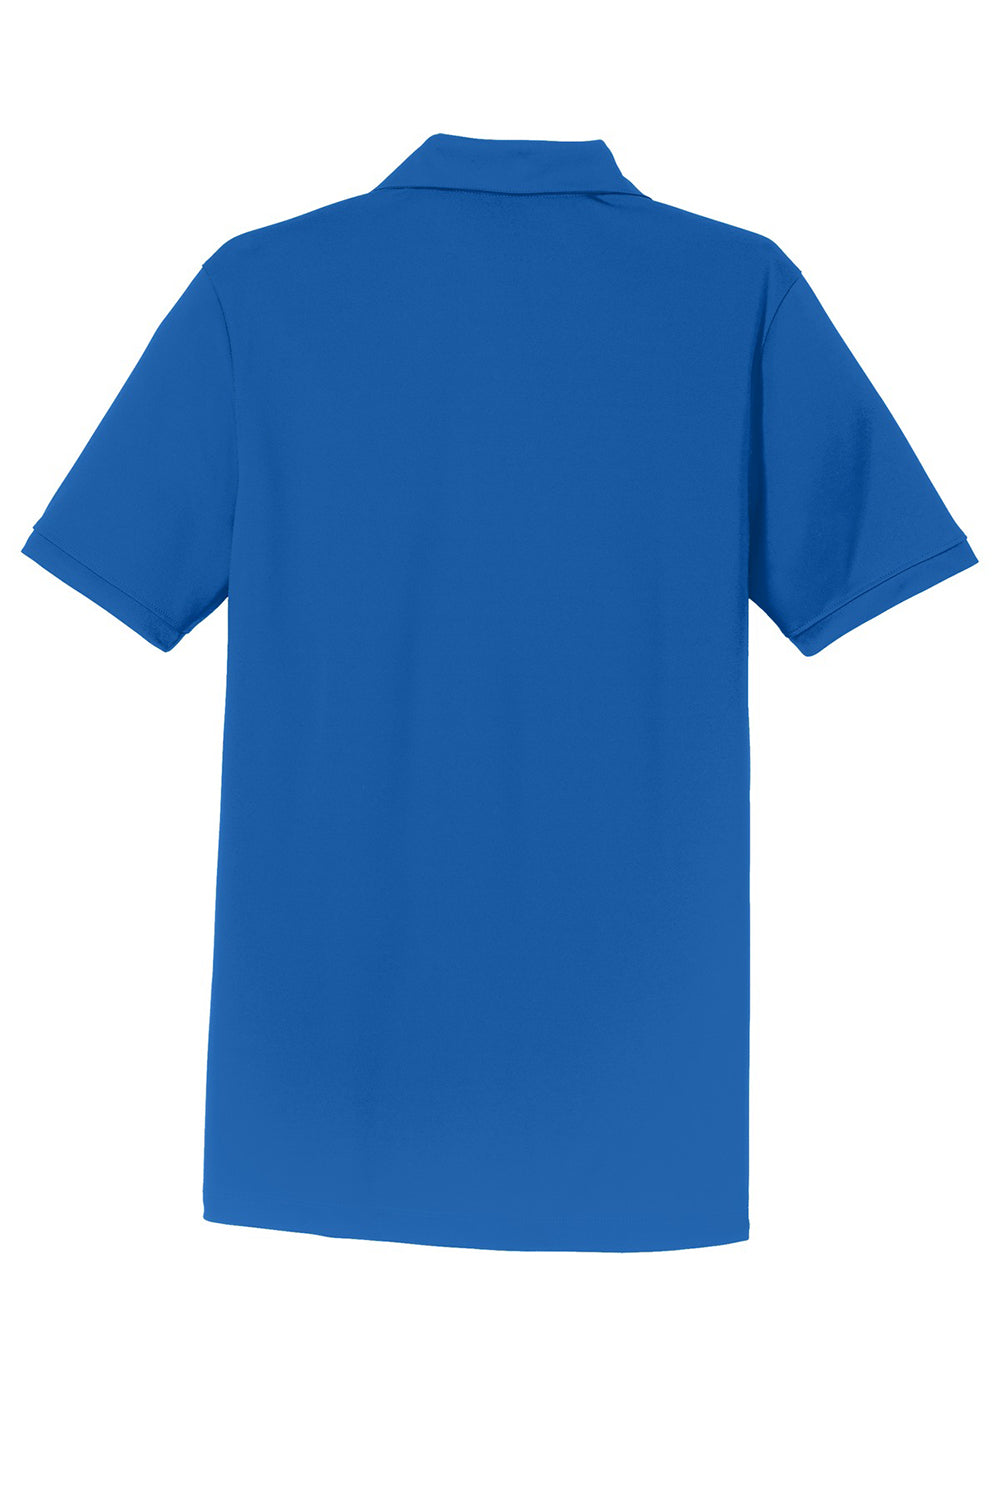 Nike 799802 Mens Players Dri-Fit Moisture Wicking Short Sleeve Polo Shirt Gym Blue Flat Back